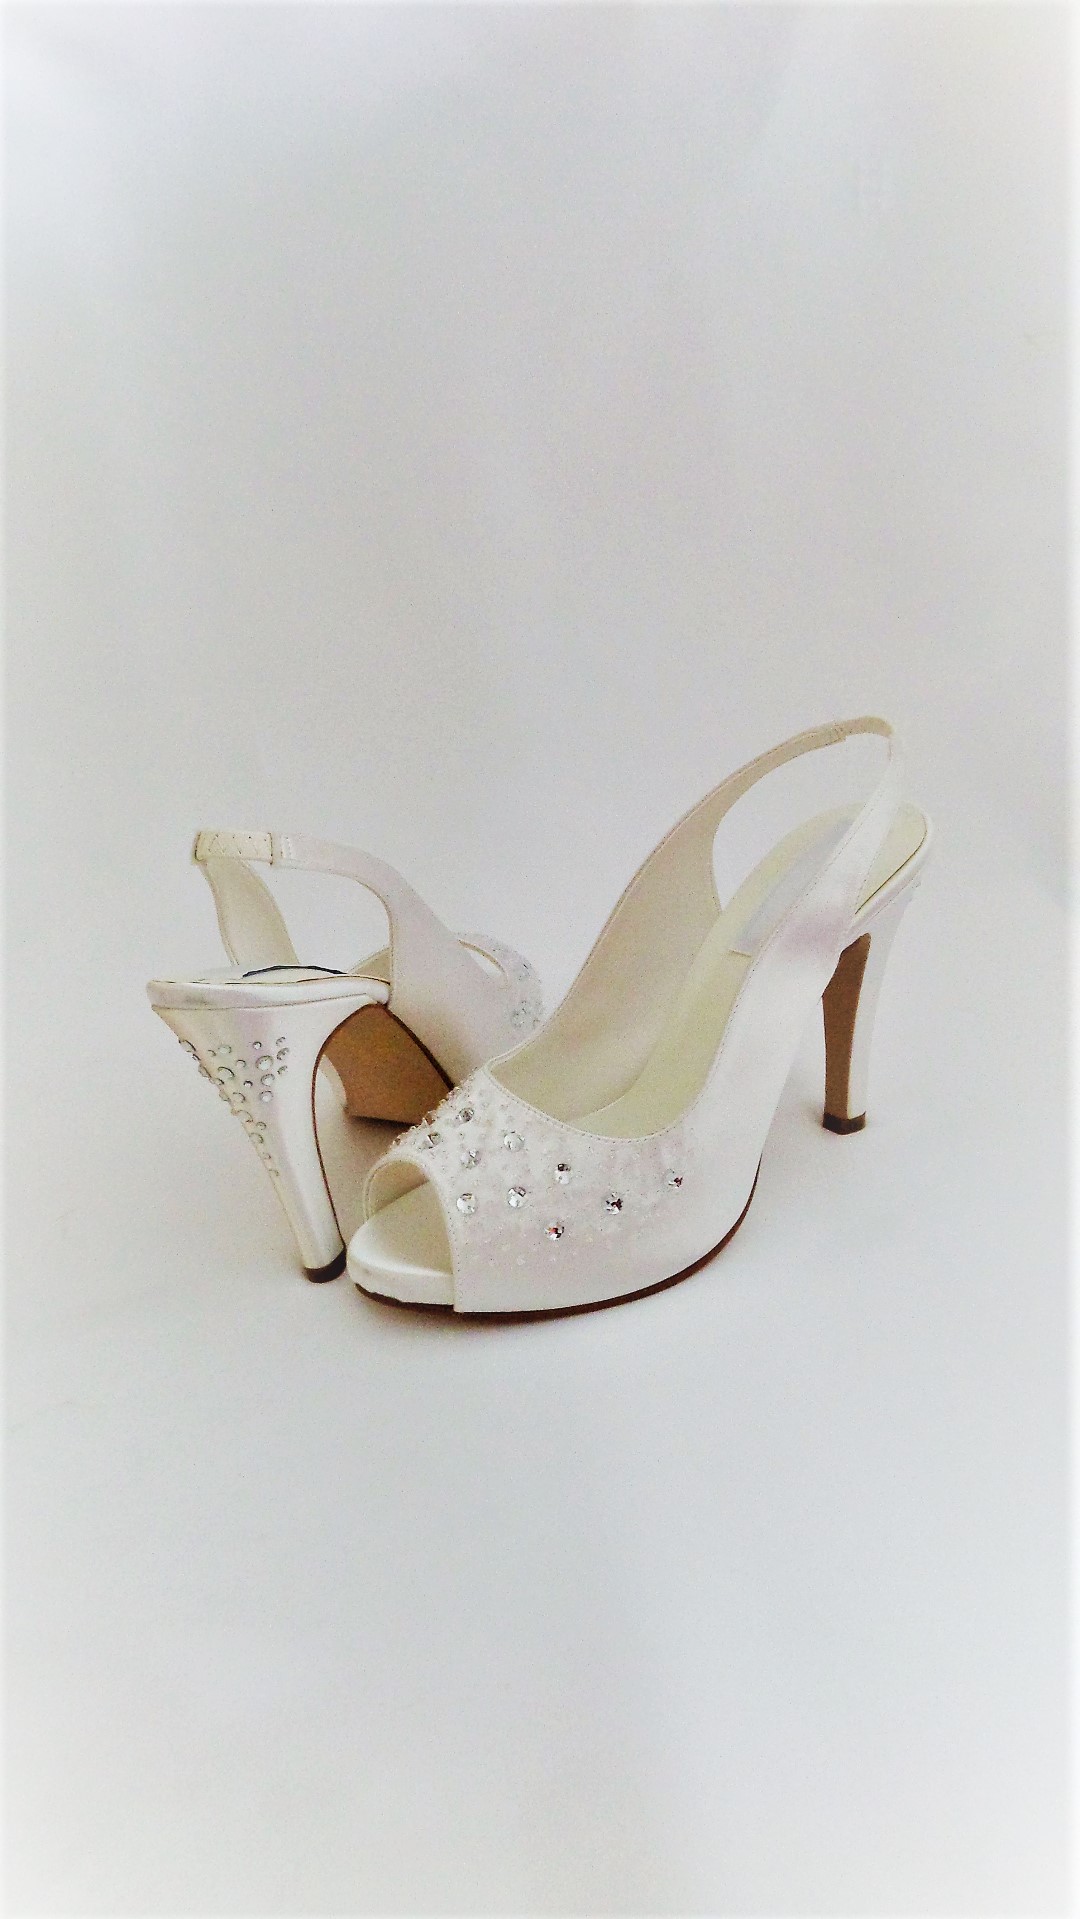 Anne Michelle L2R990 Ladies White Satin Bridal Shoe w/Bow Detail R40B